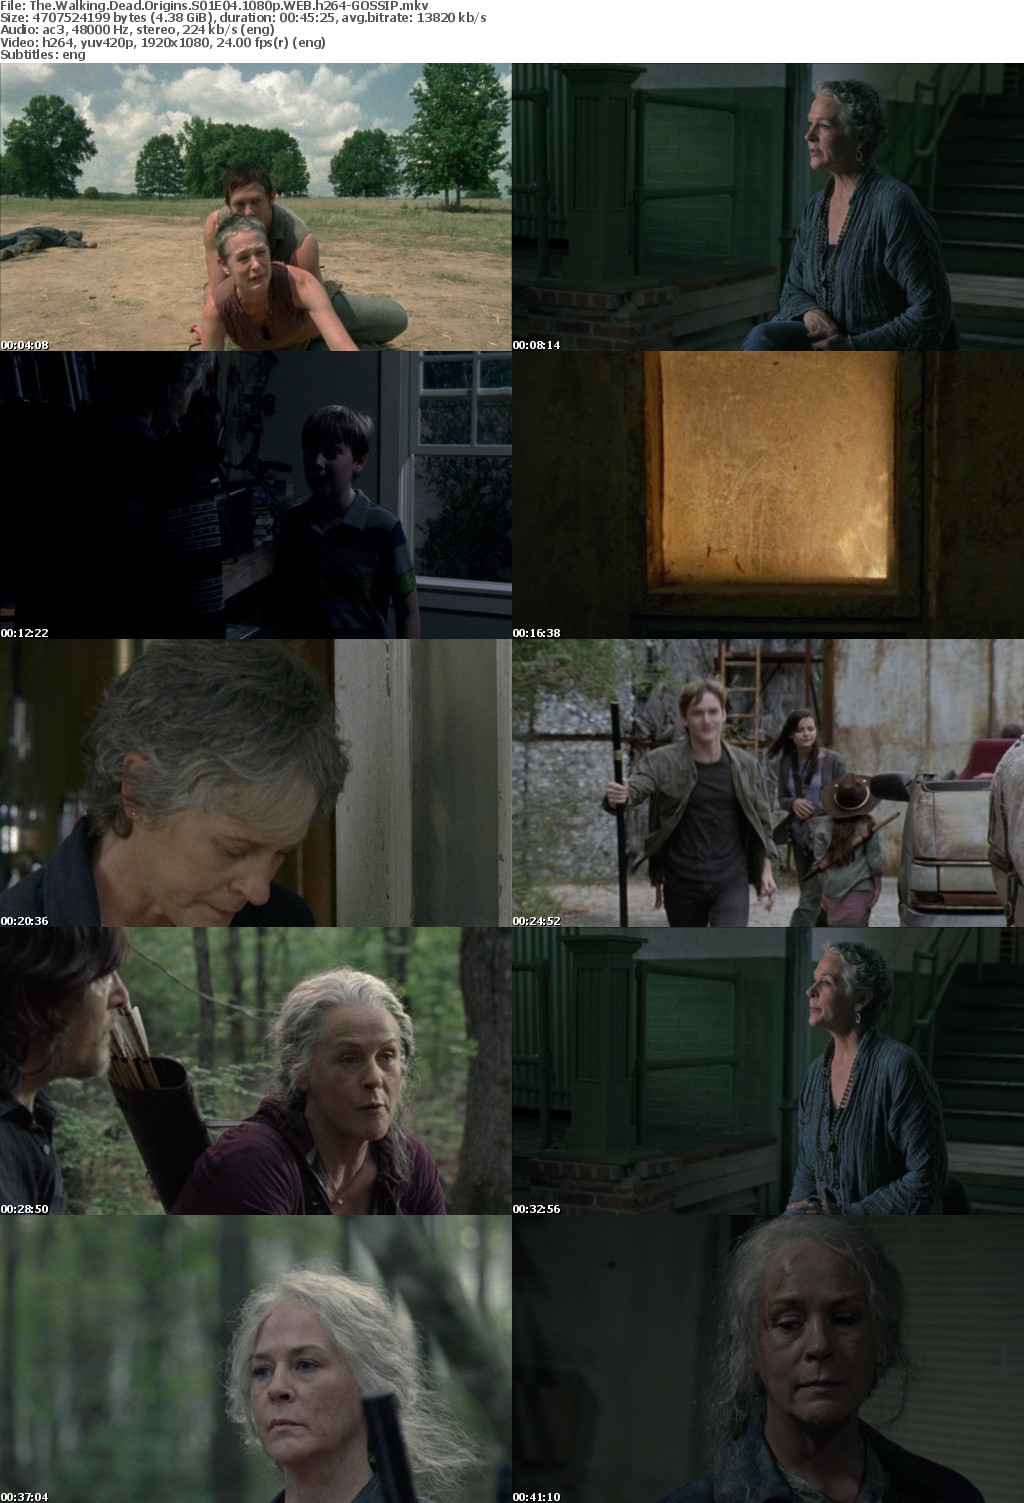 The Walking Dead Origins S01E04 1080p WEB h264-GOSSIP